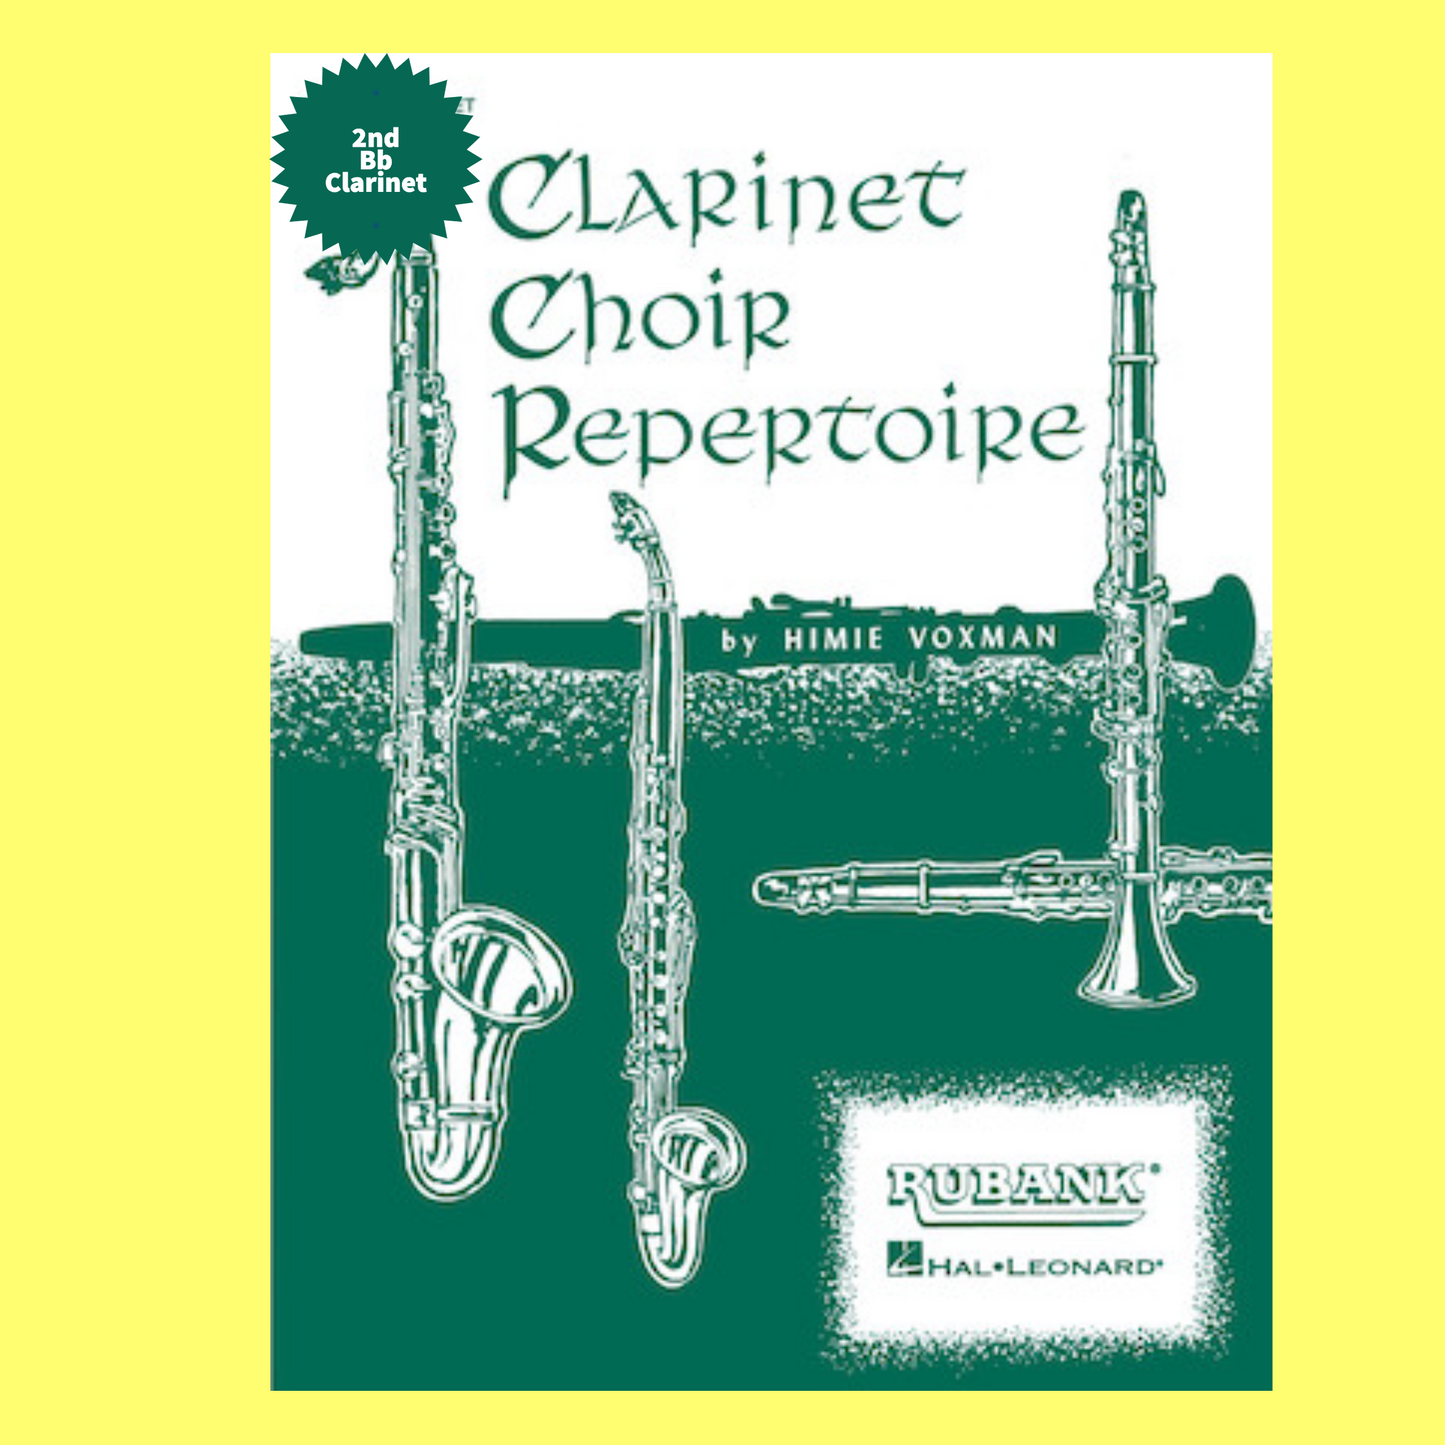 Clarinet Choir Repertoire - 2nd Bb Clarinet Part Book